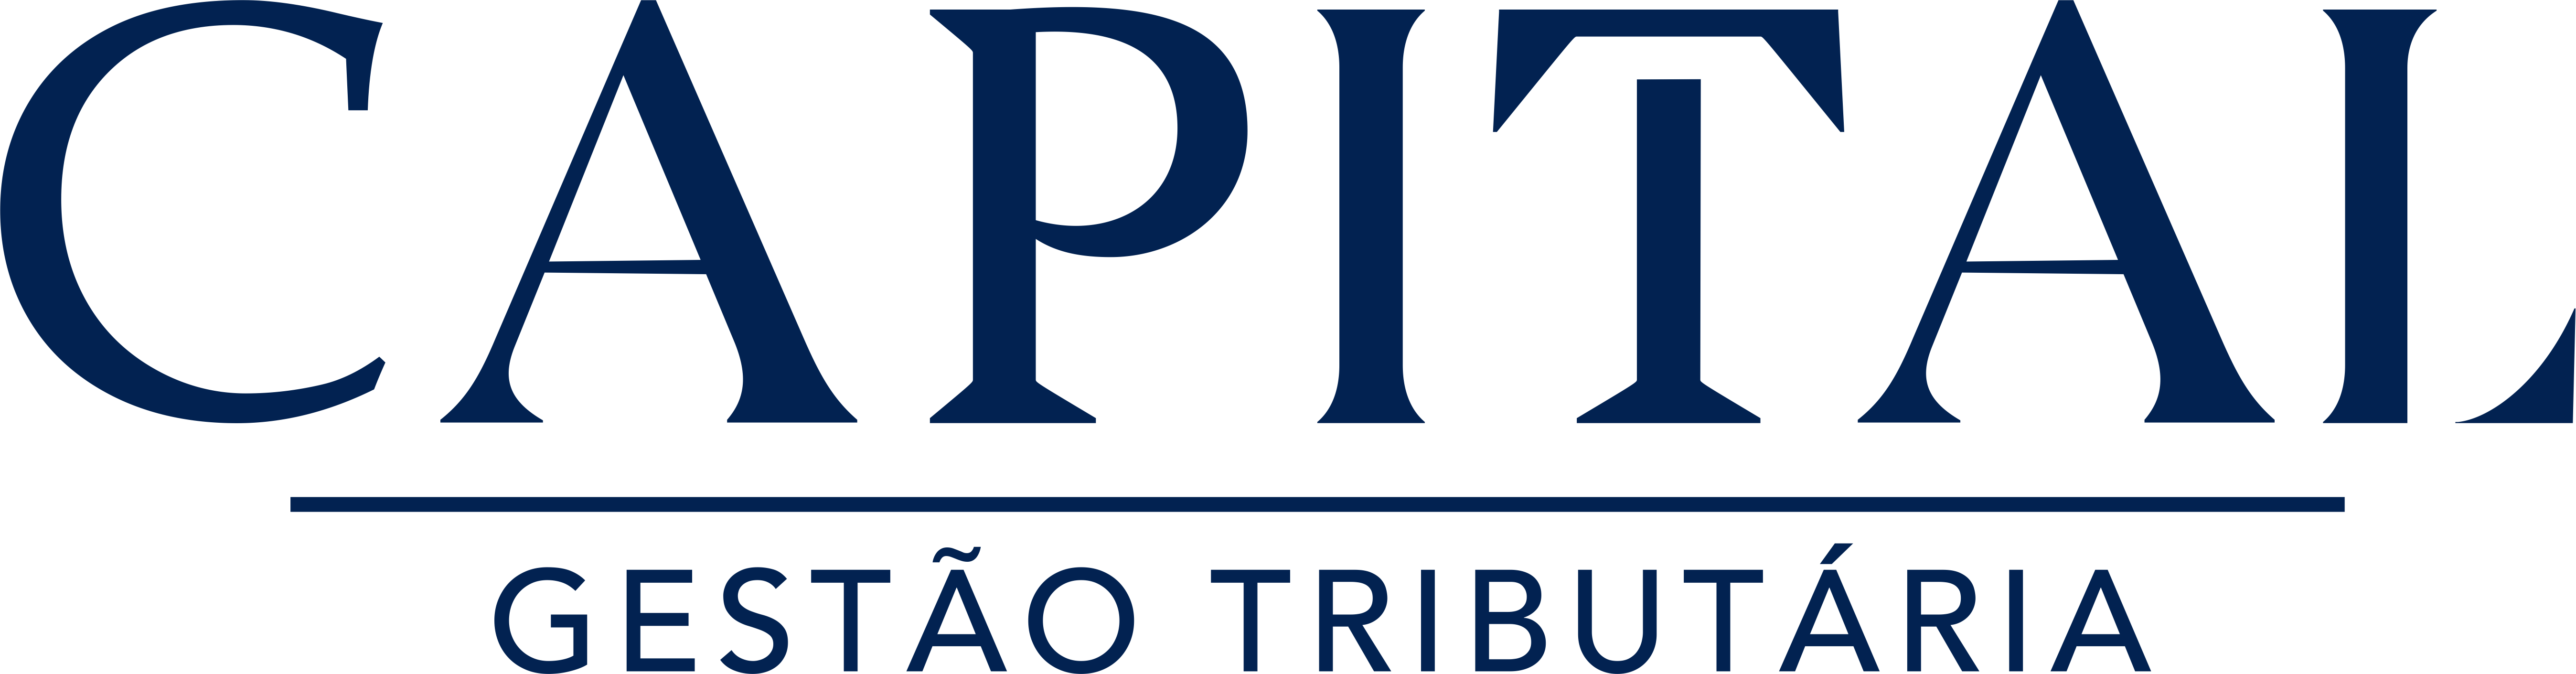 capital_gestao_tributaria_logo_azul